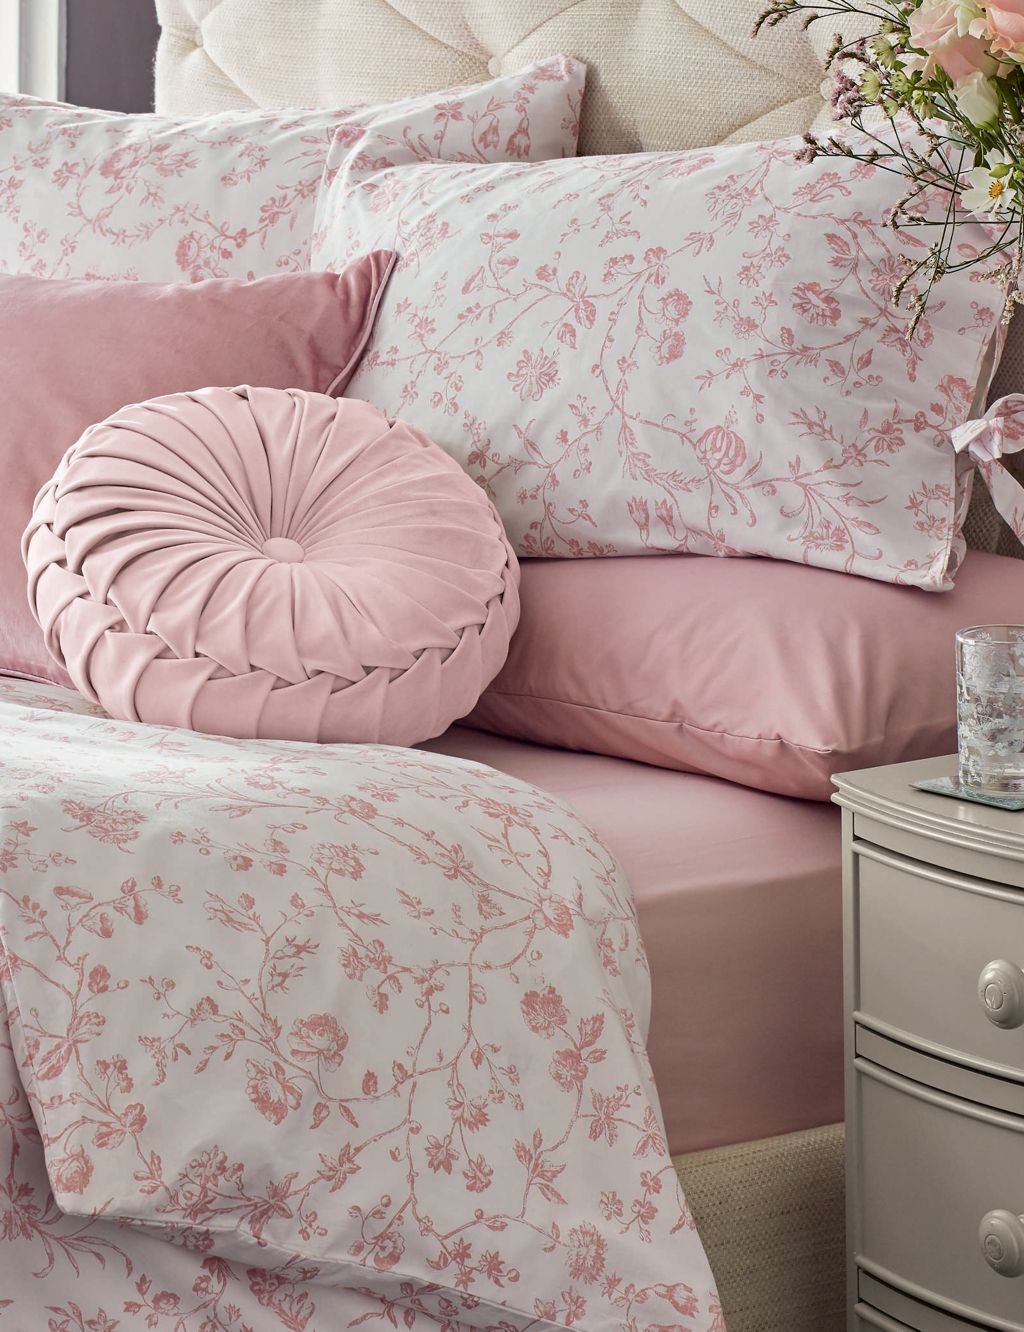 Cotton Percale Floral Bedding Set image 1